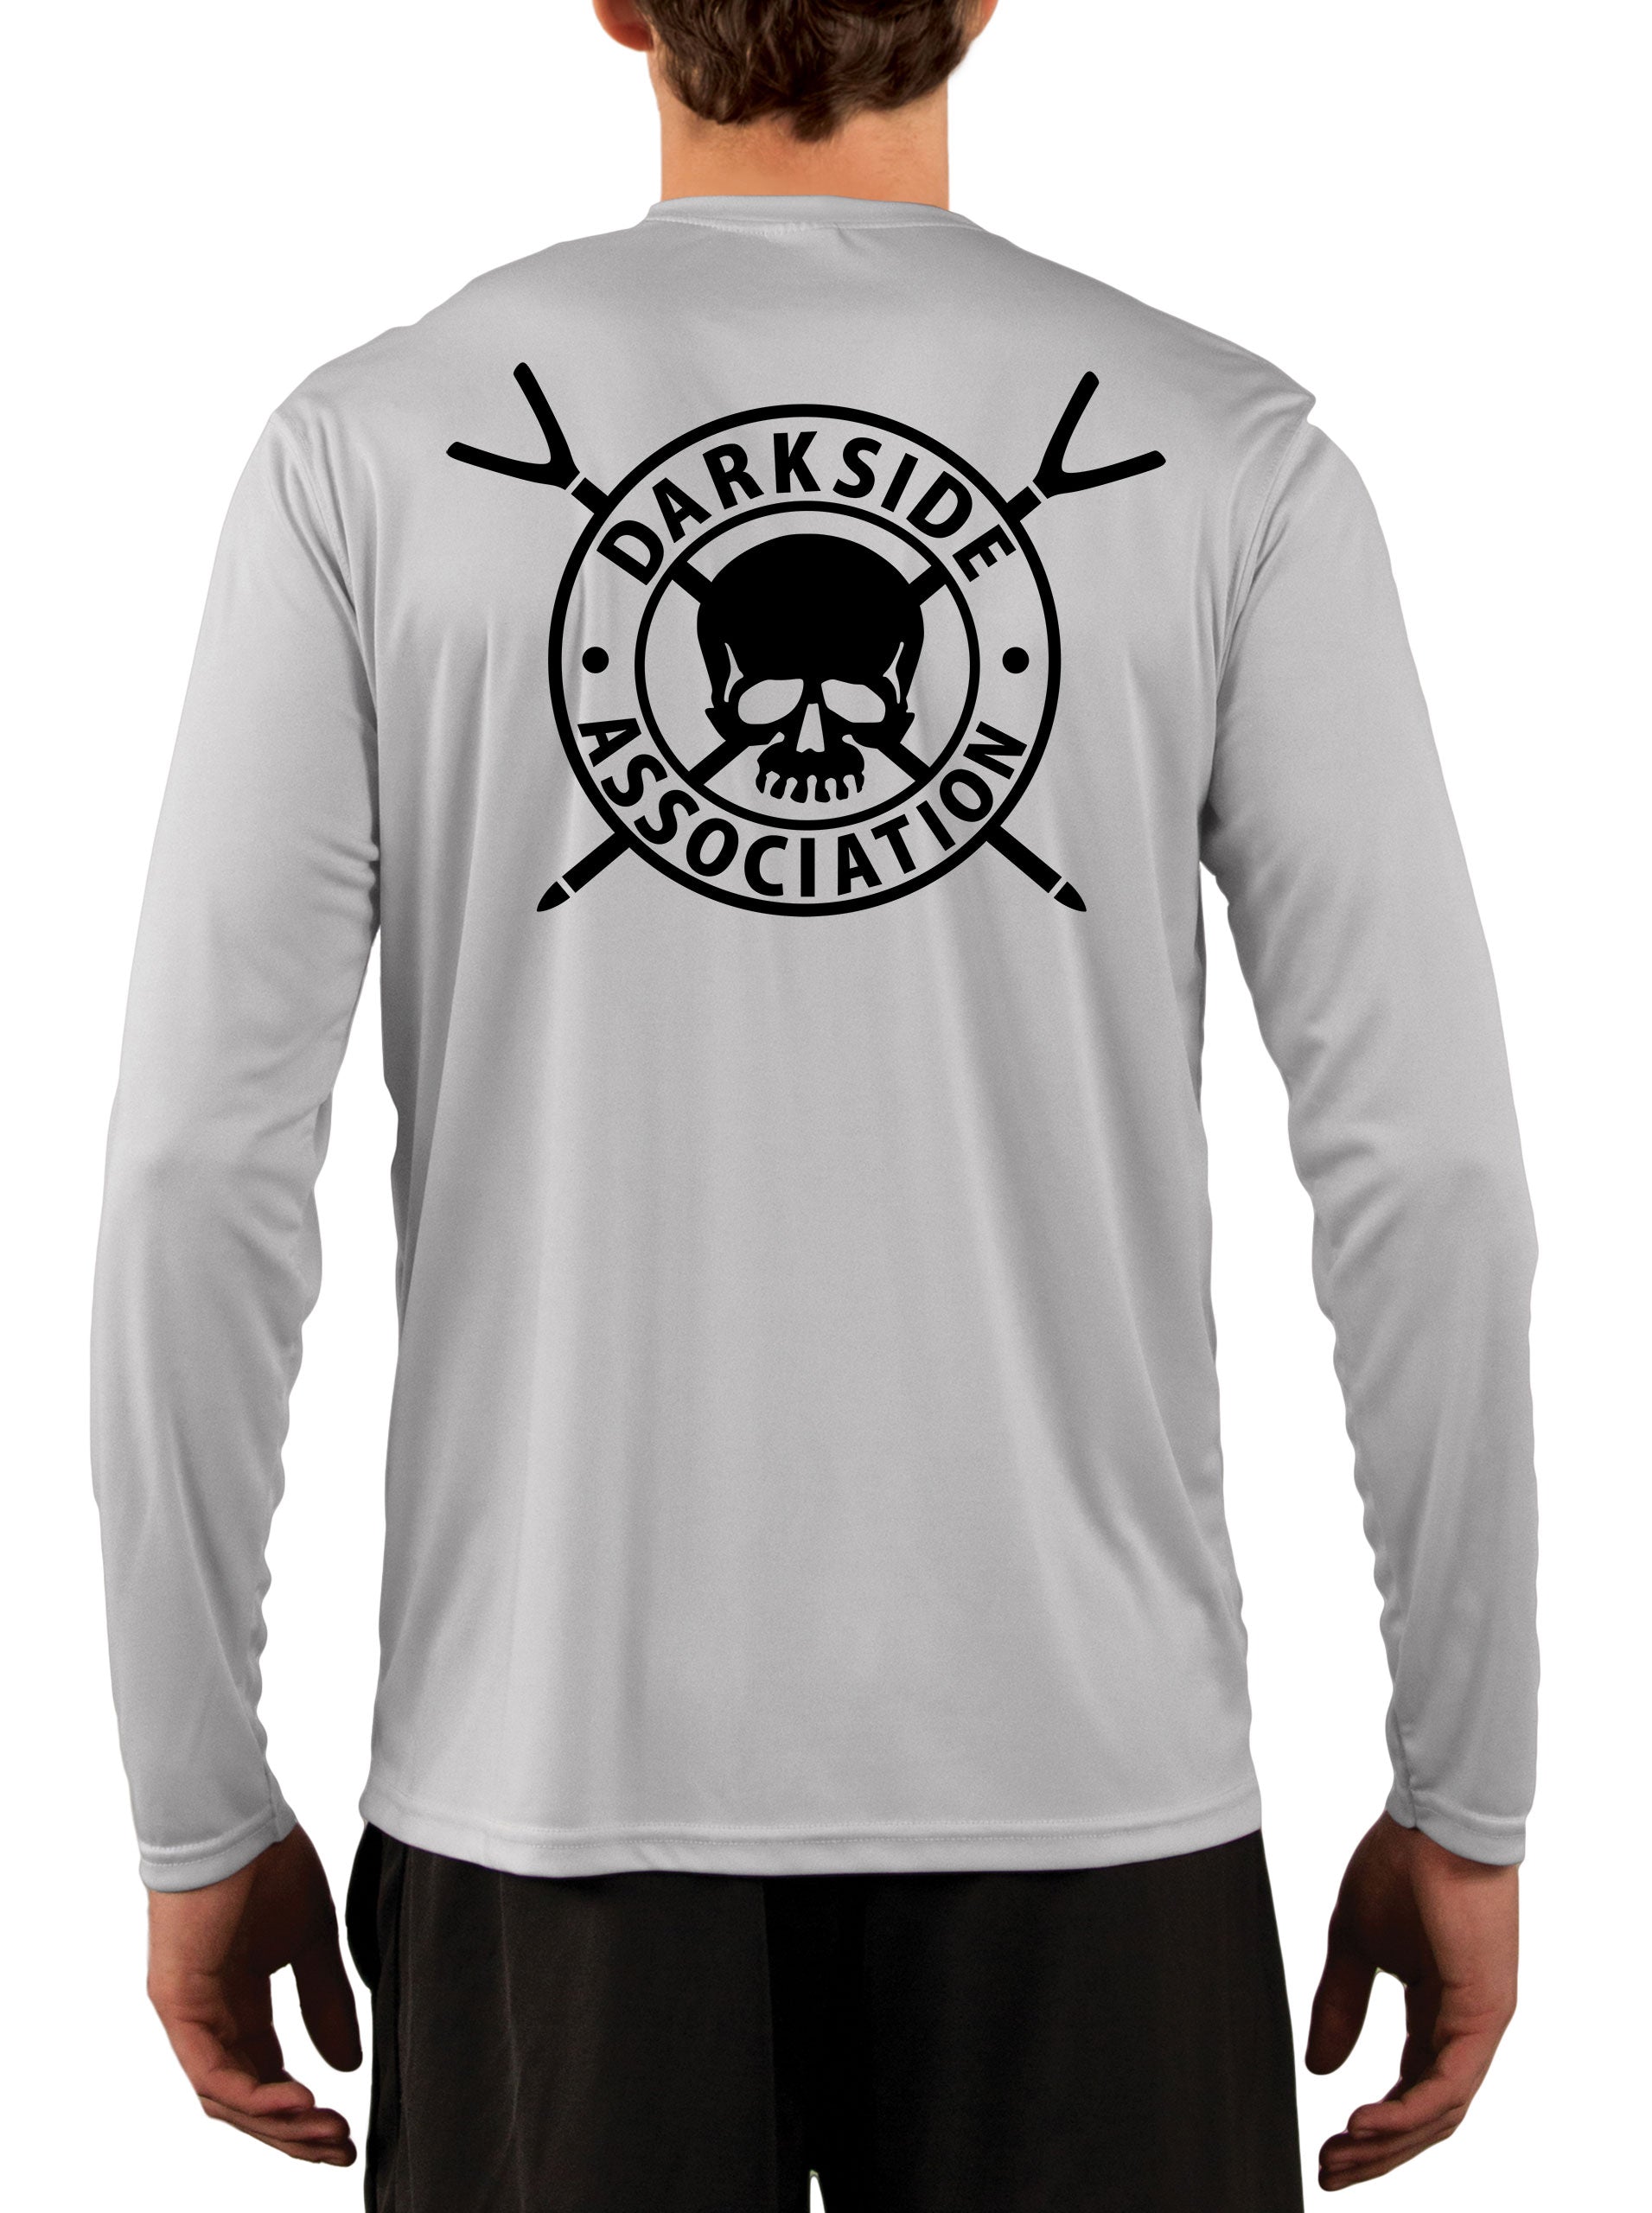 Darkside Association Skiff Fishing Shirts for Men Medium / Pearl Gray